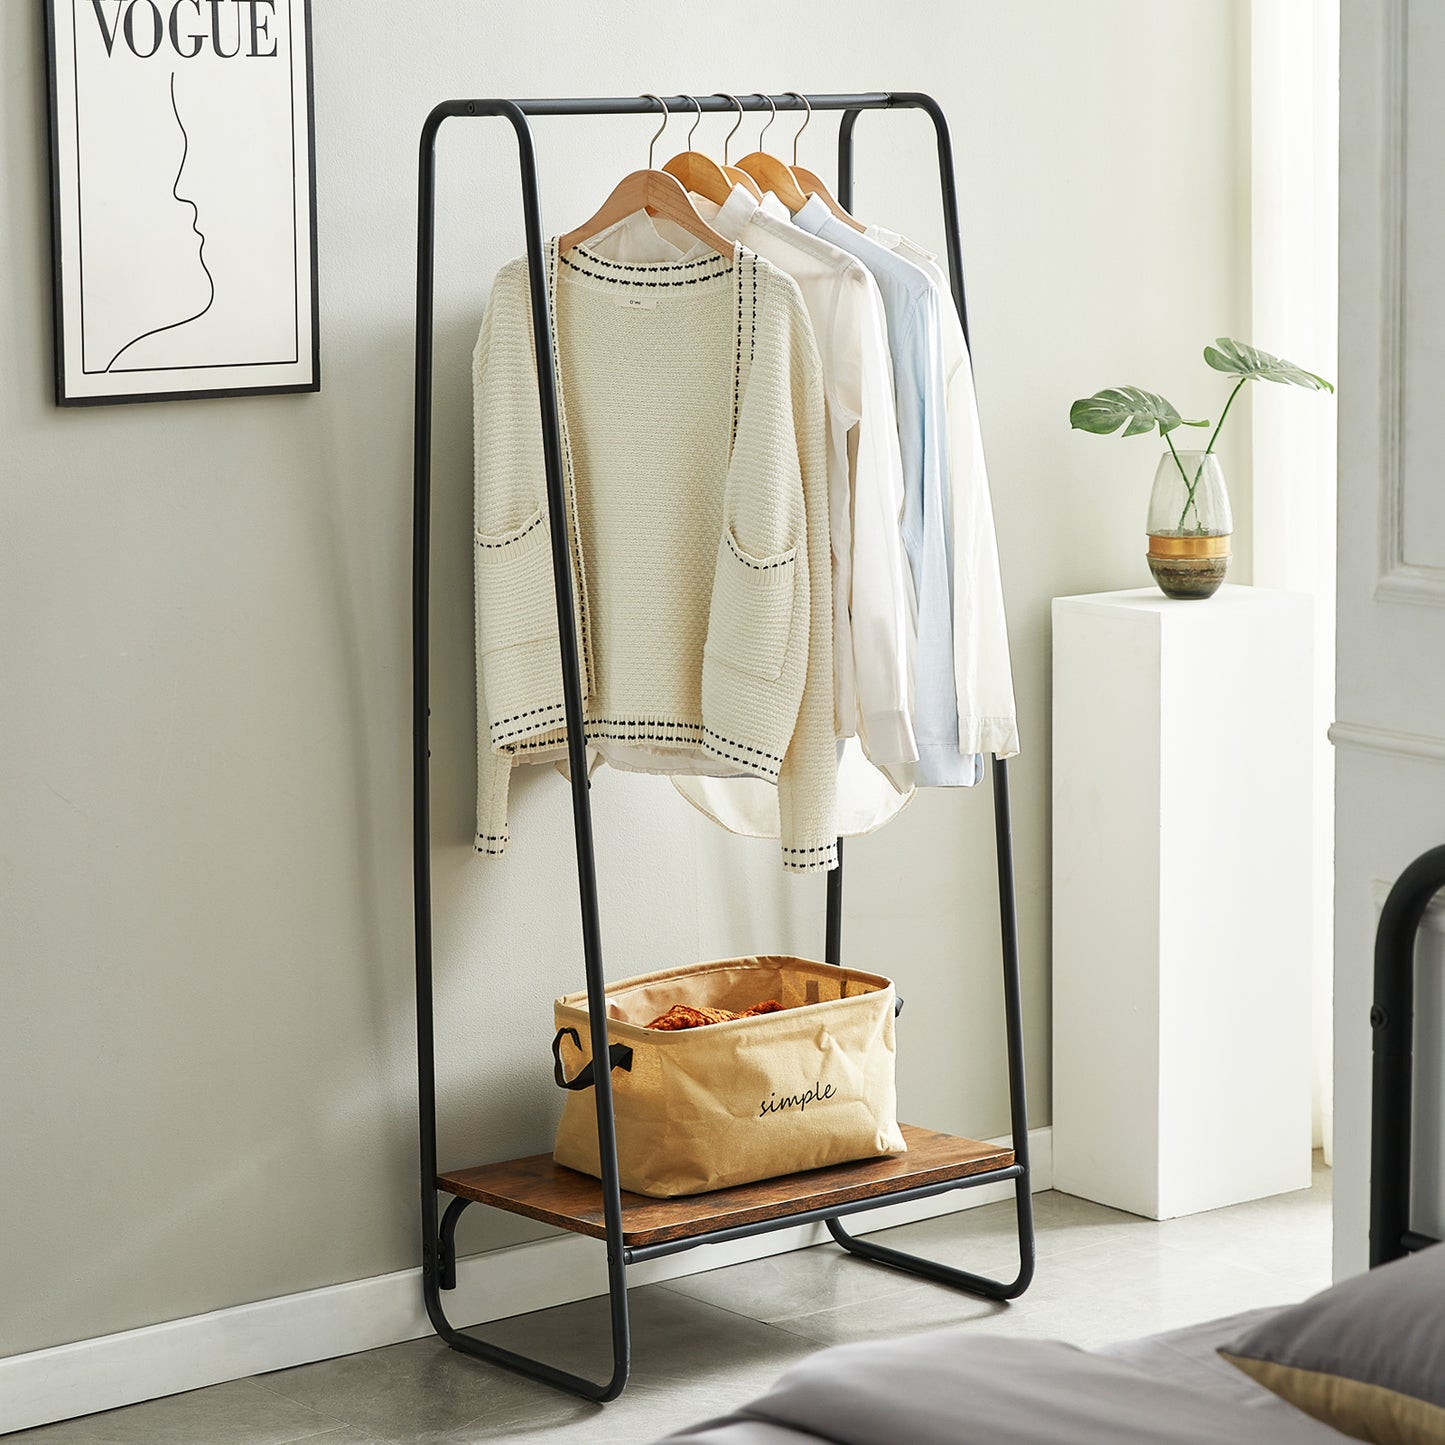 ELDER Clothing Rack With Wood Shelves - Brown/White